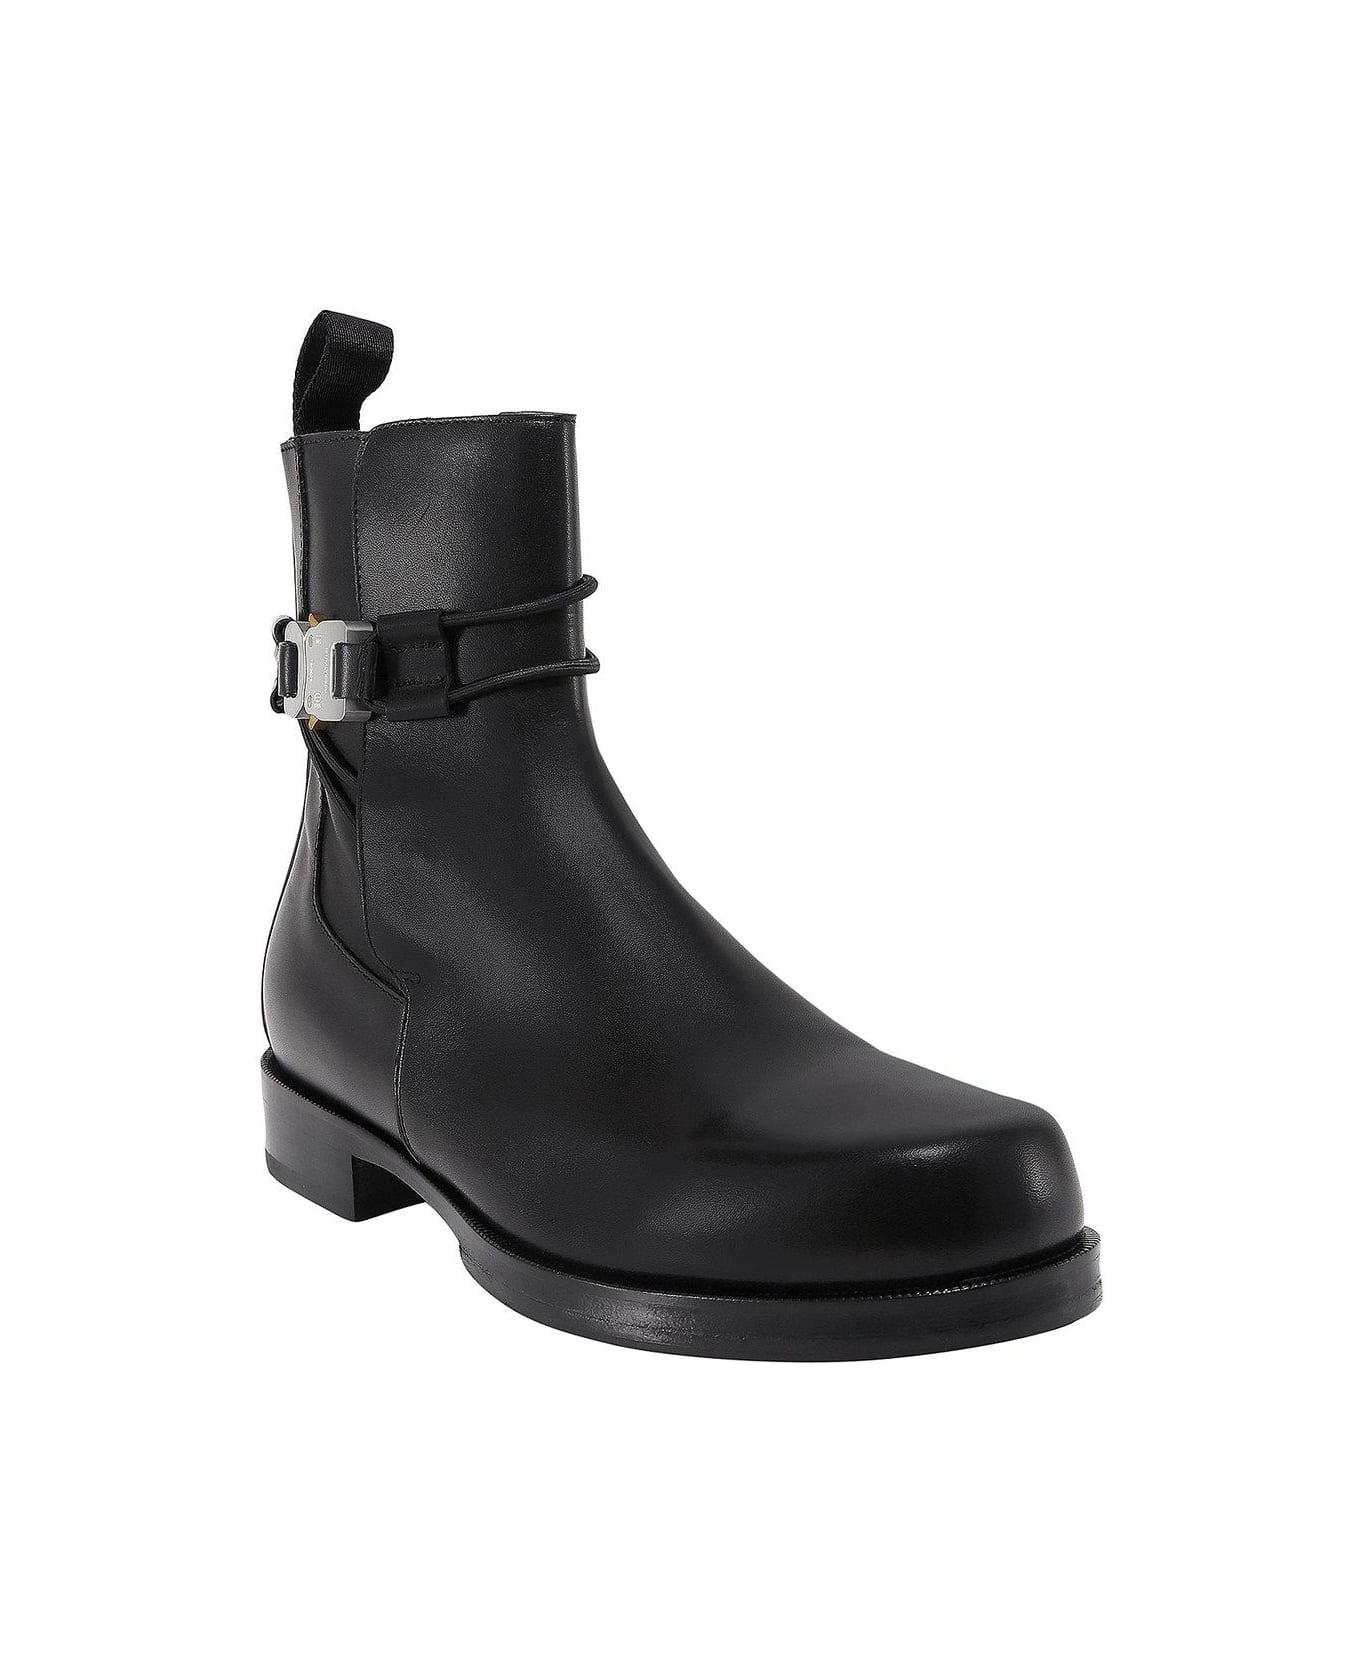 1017 ALYX 9SM Vibram Sole Chelsea Boots - Black ブーツ